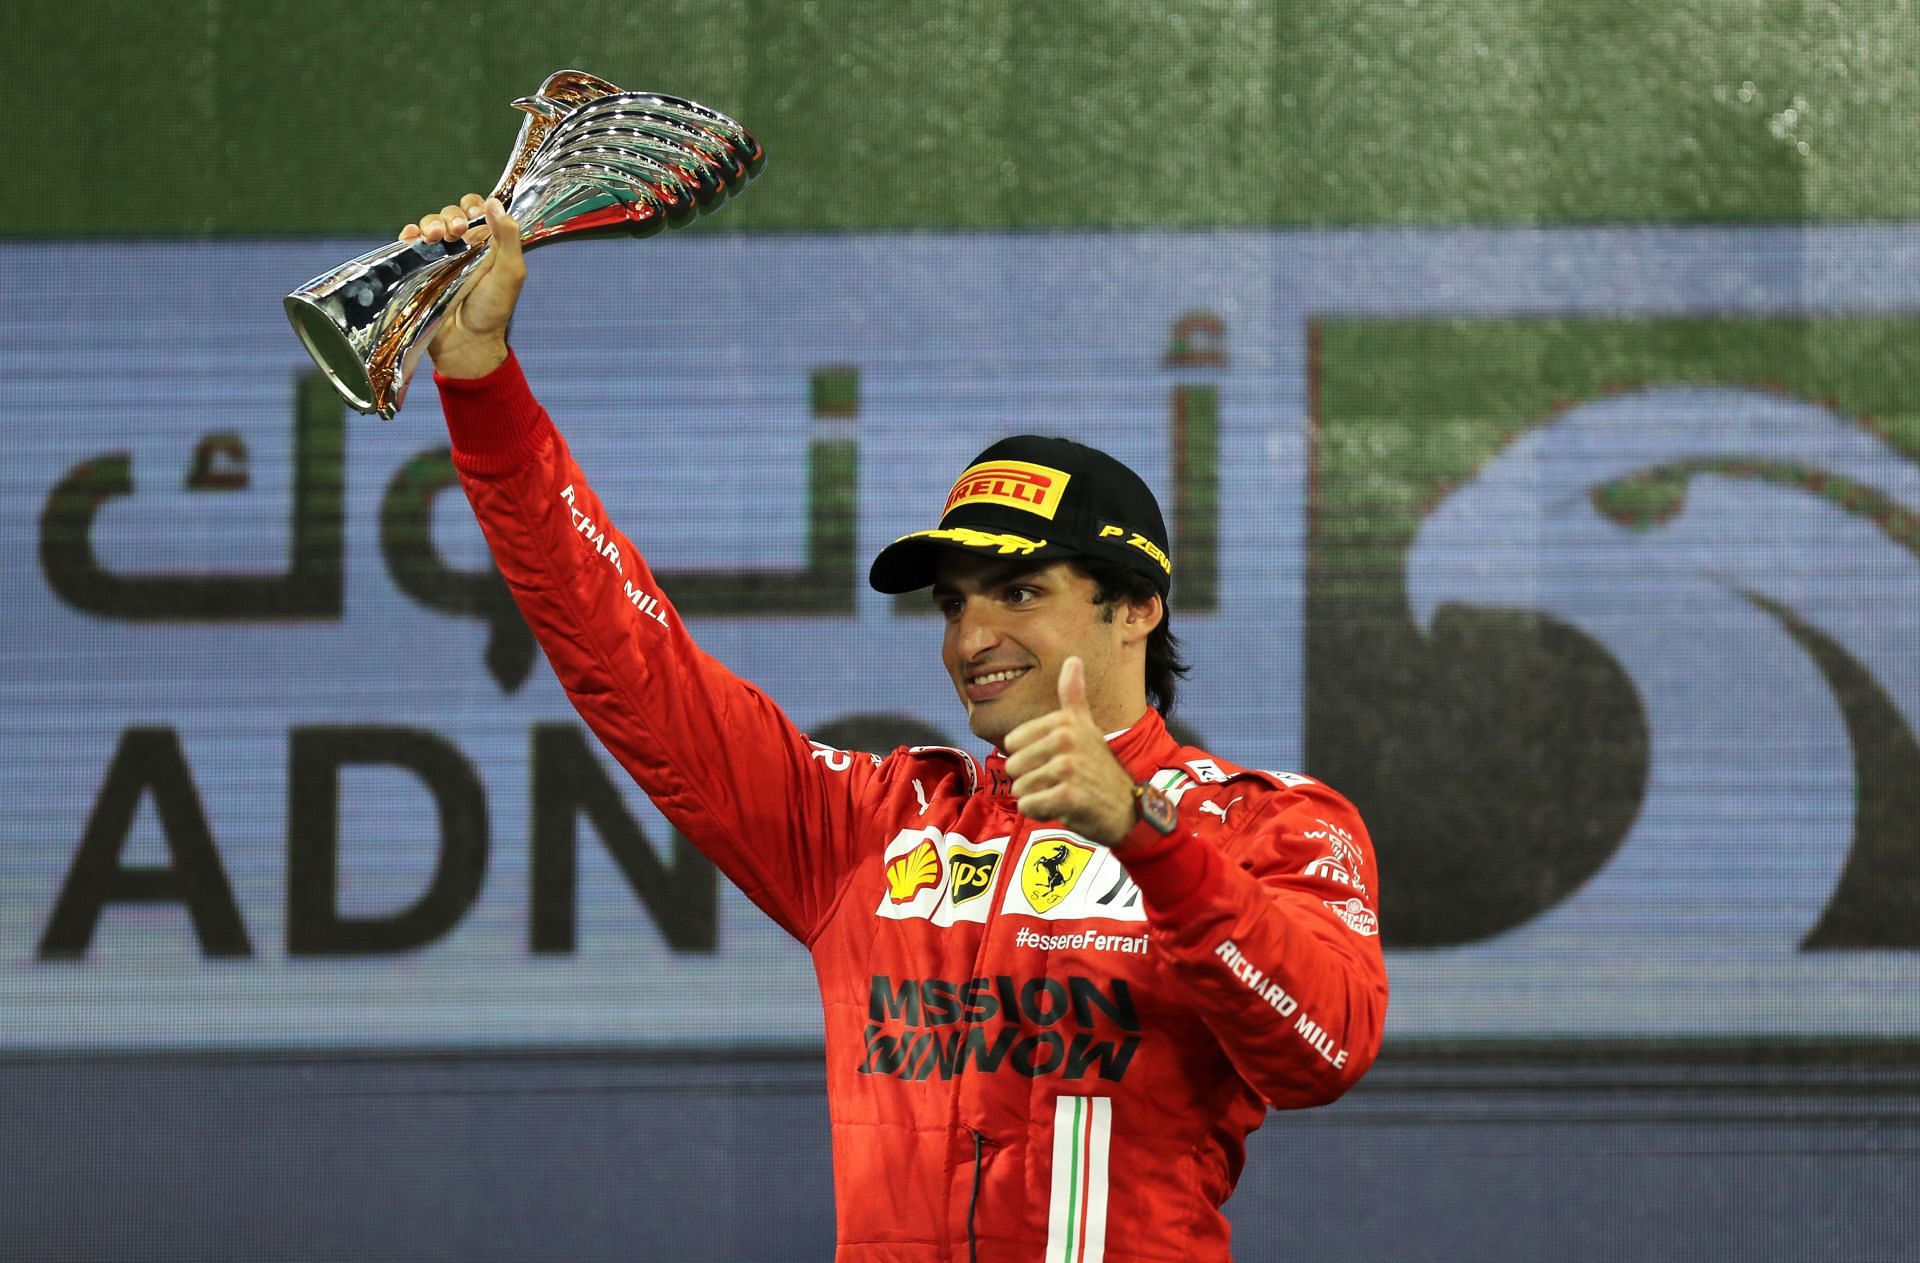 F1 Grand Prix of Abu Dhabi - Carlos Sainz scored his final podium of the season